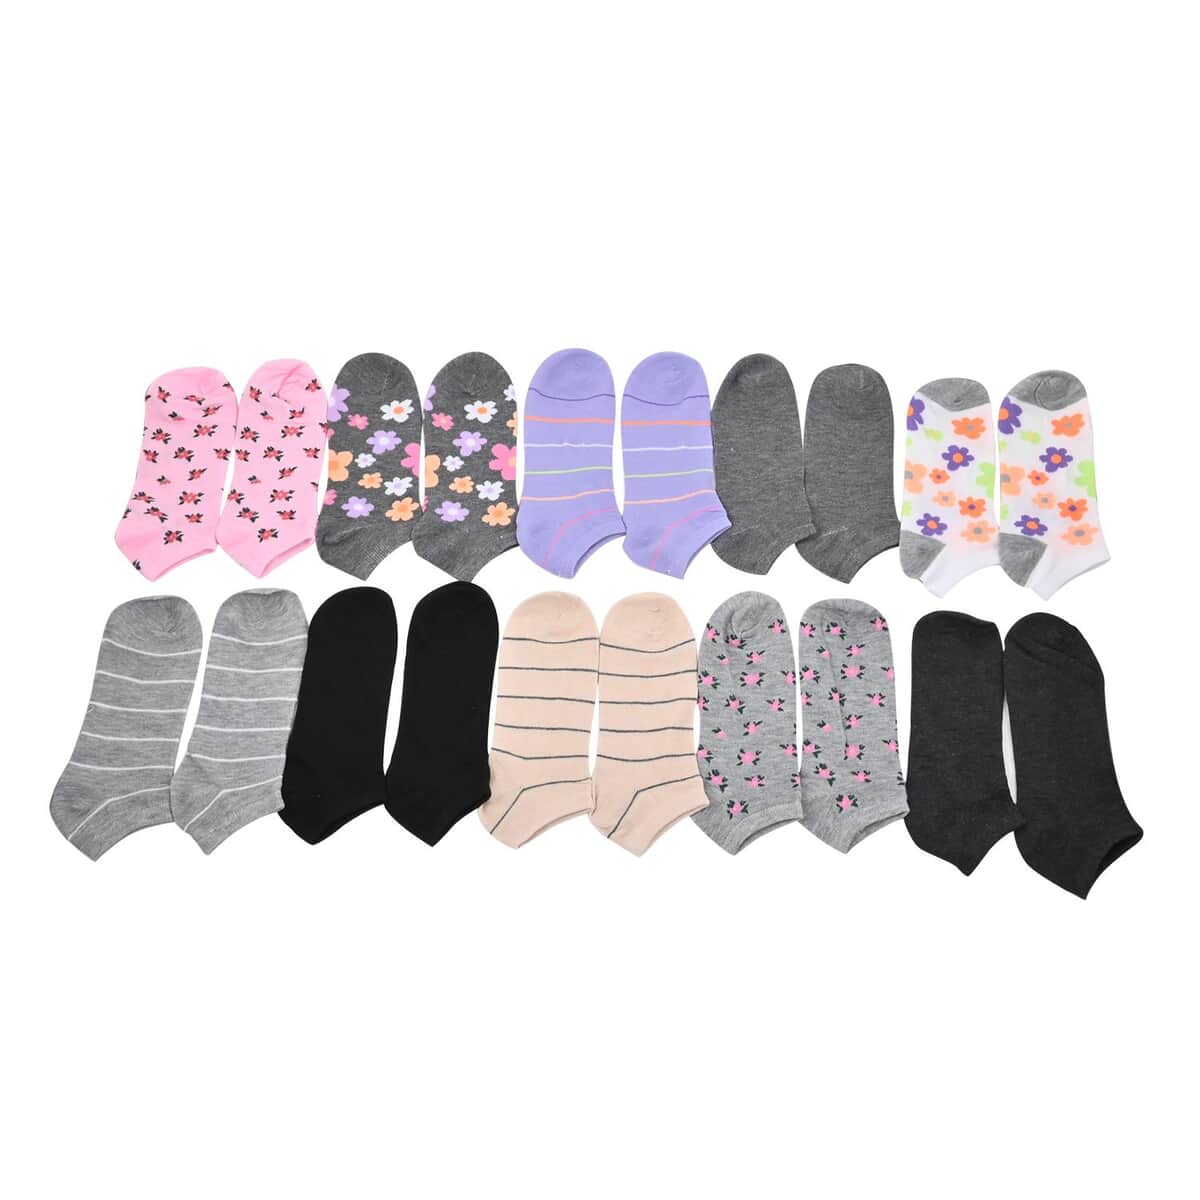 XOXO 10 Pairs Women's Low Cut Floral & Stripe Socks (Sizes 4-10) -Dark Gray/Pink image number 0